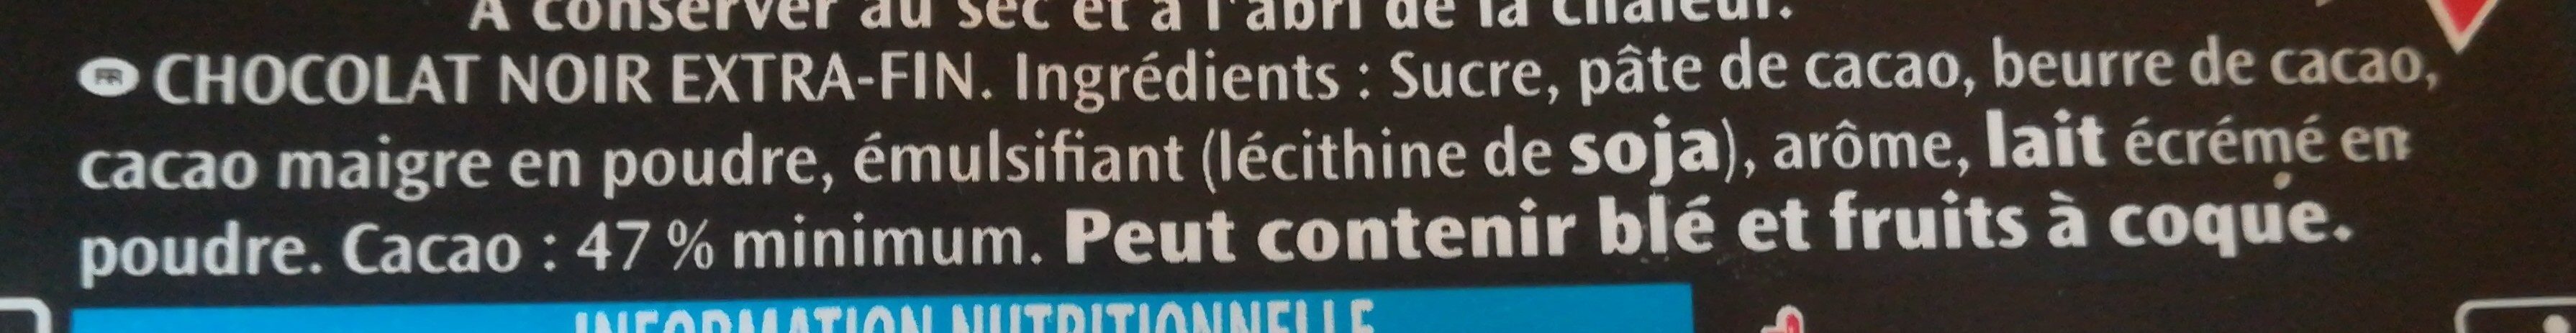 Poulain noir extra - Ingredients - fr